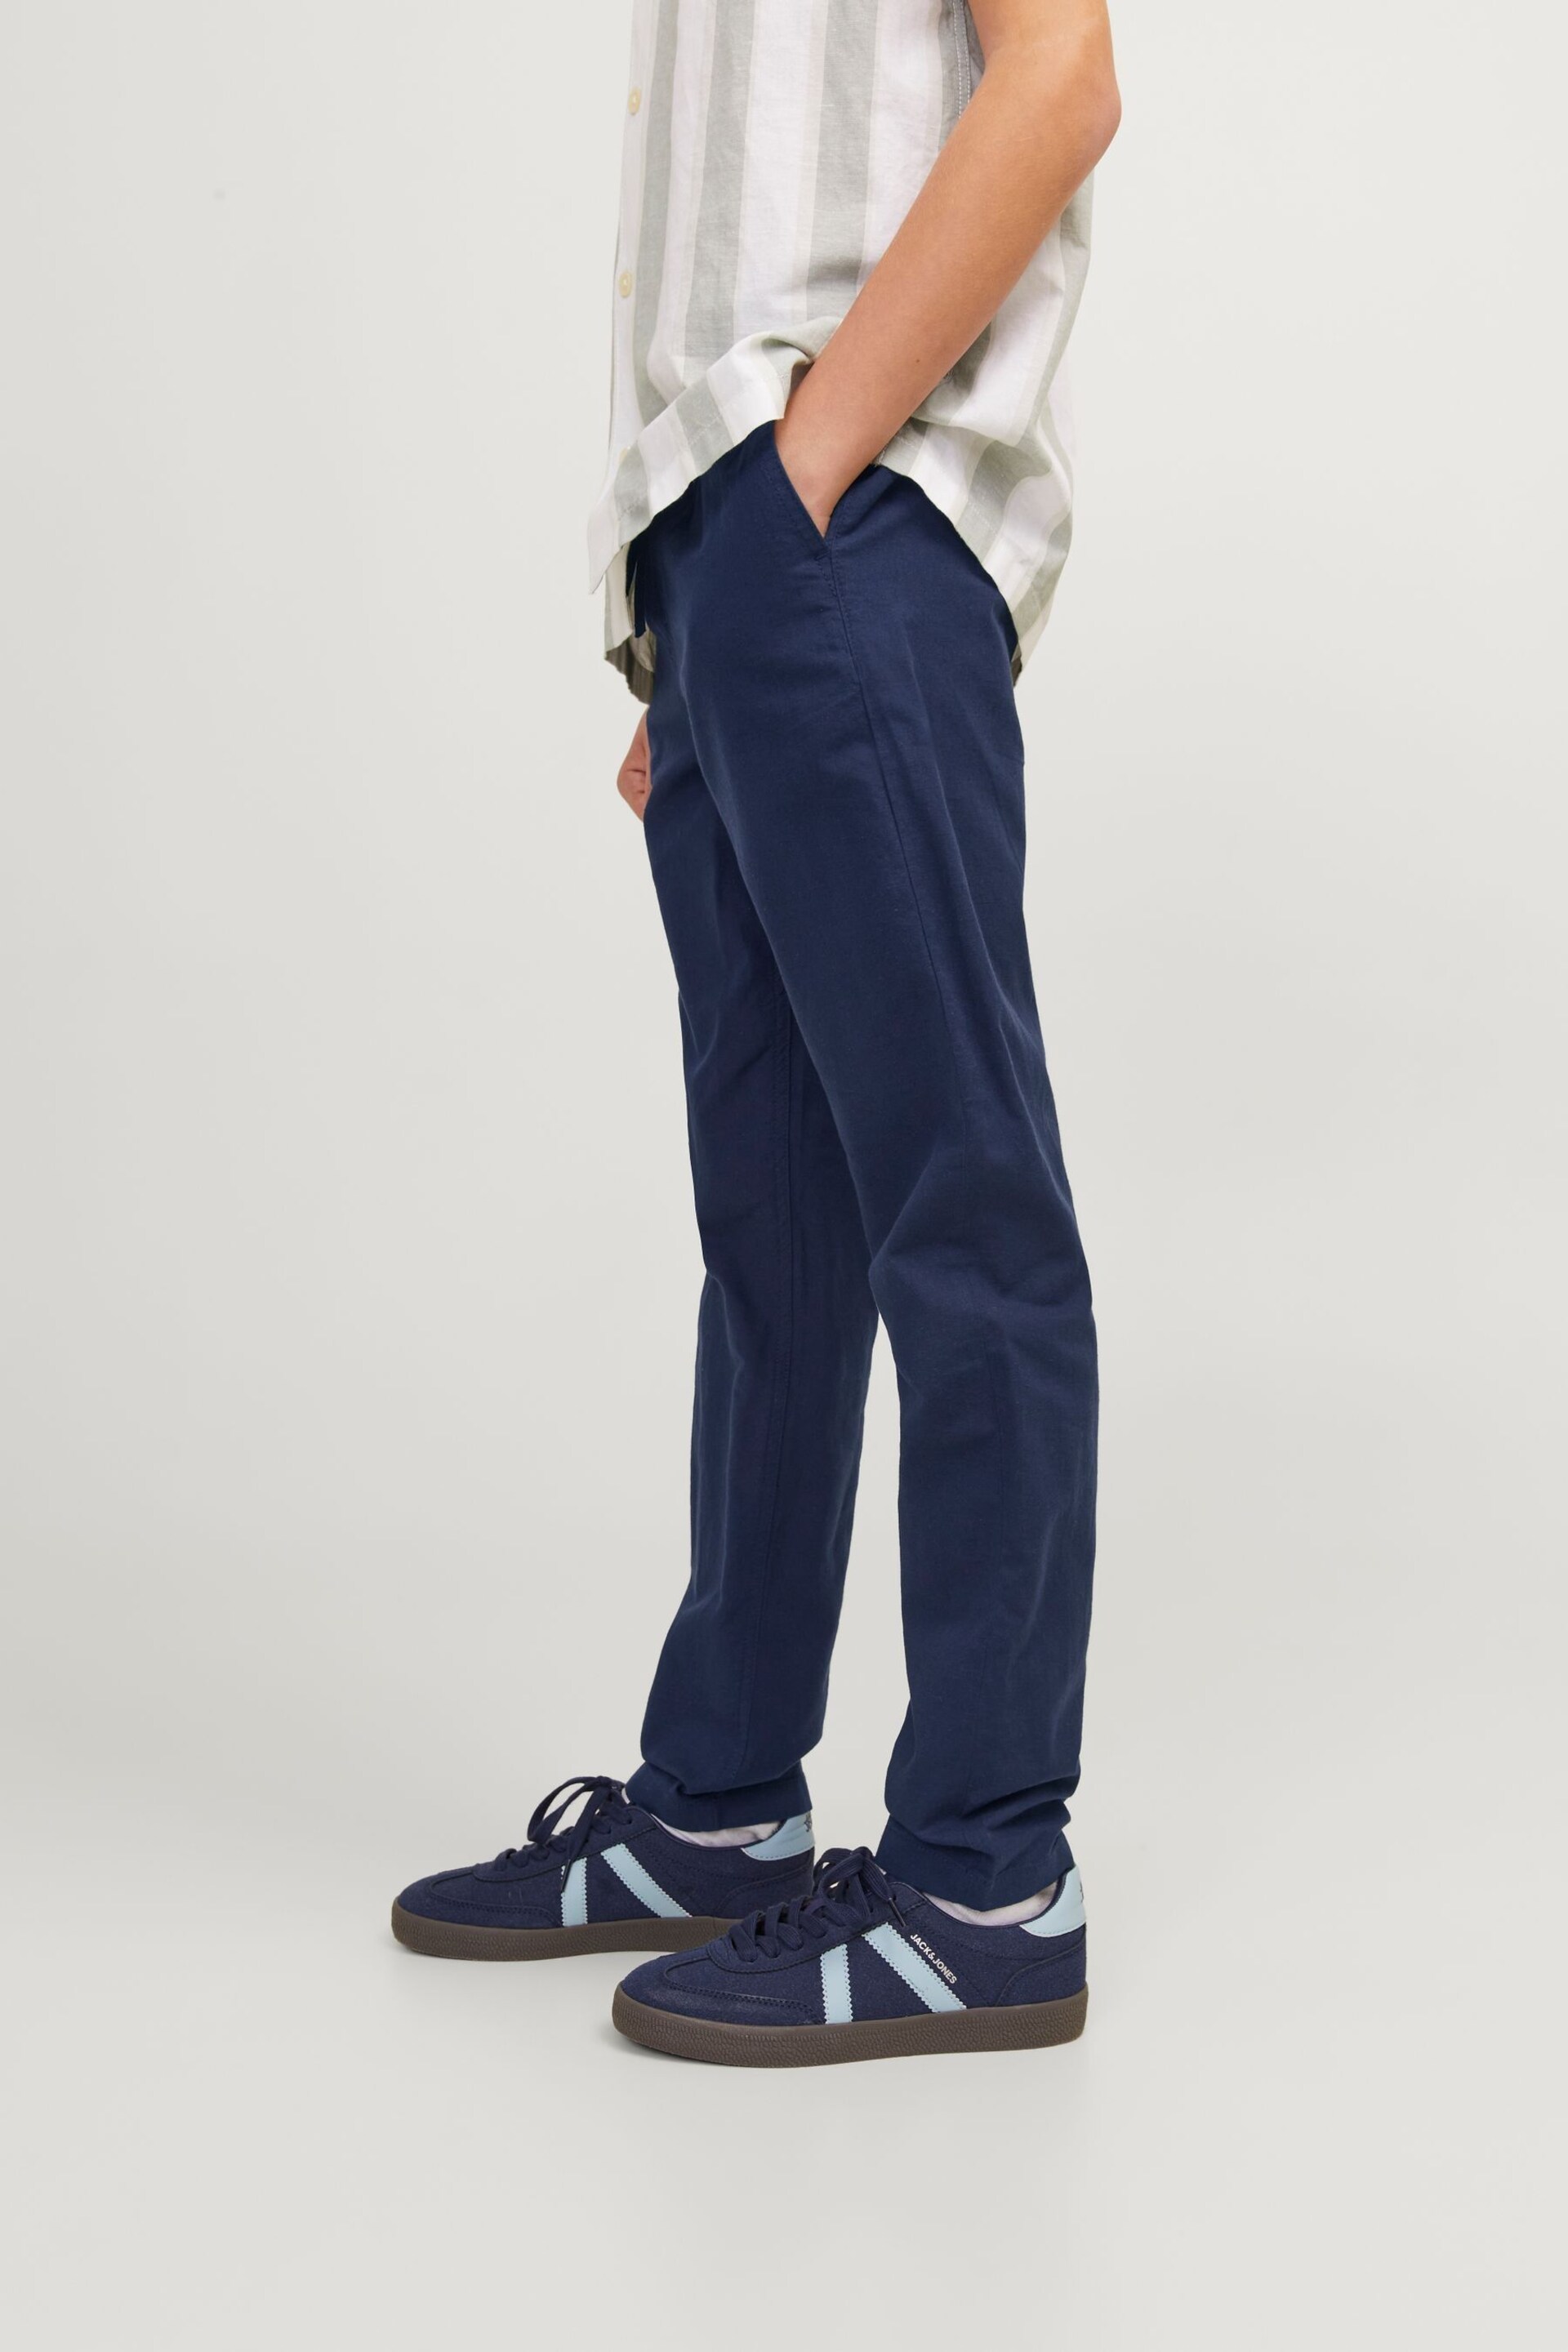 JACK & JONES JUNIOR Blue Linen Blend Drawstring Waist Trousers - Image 4 of 8